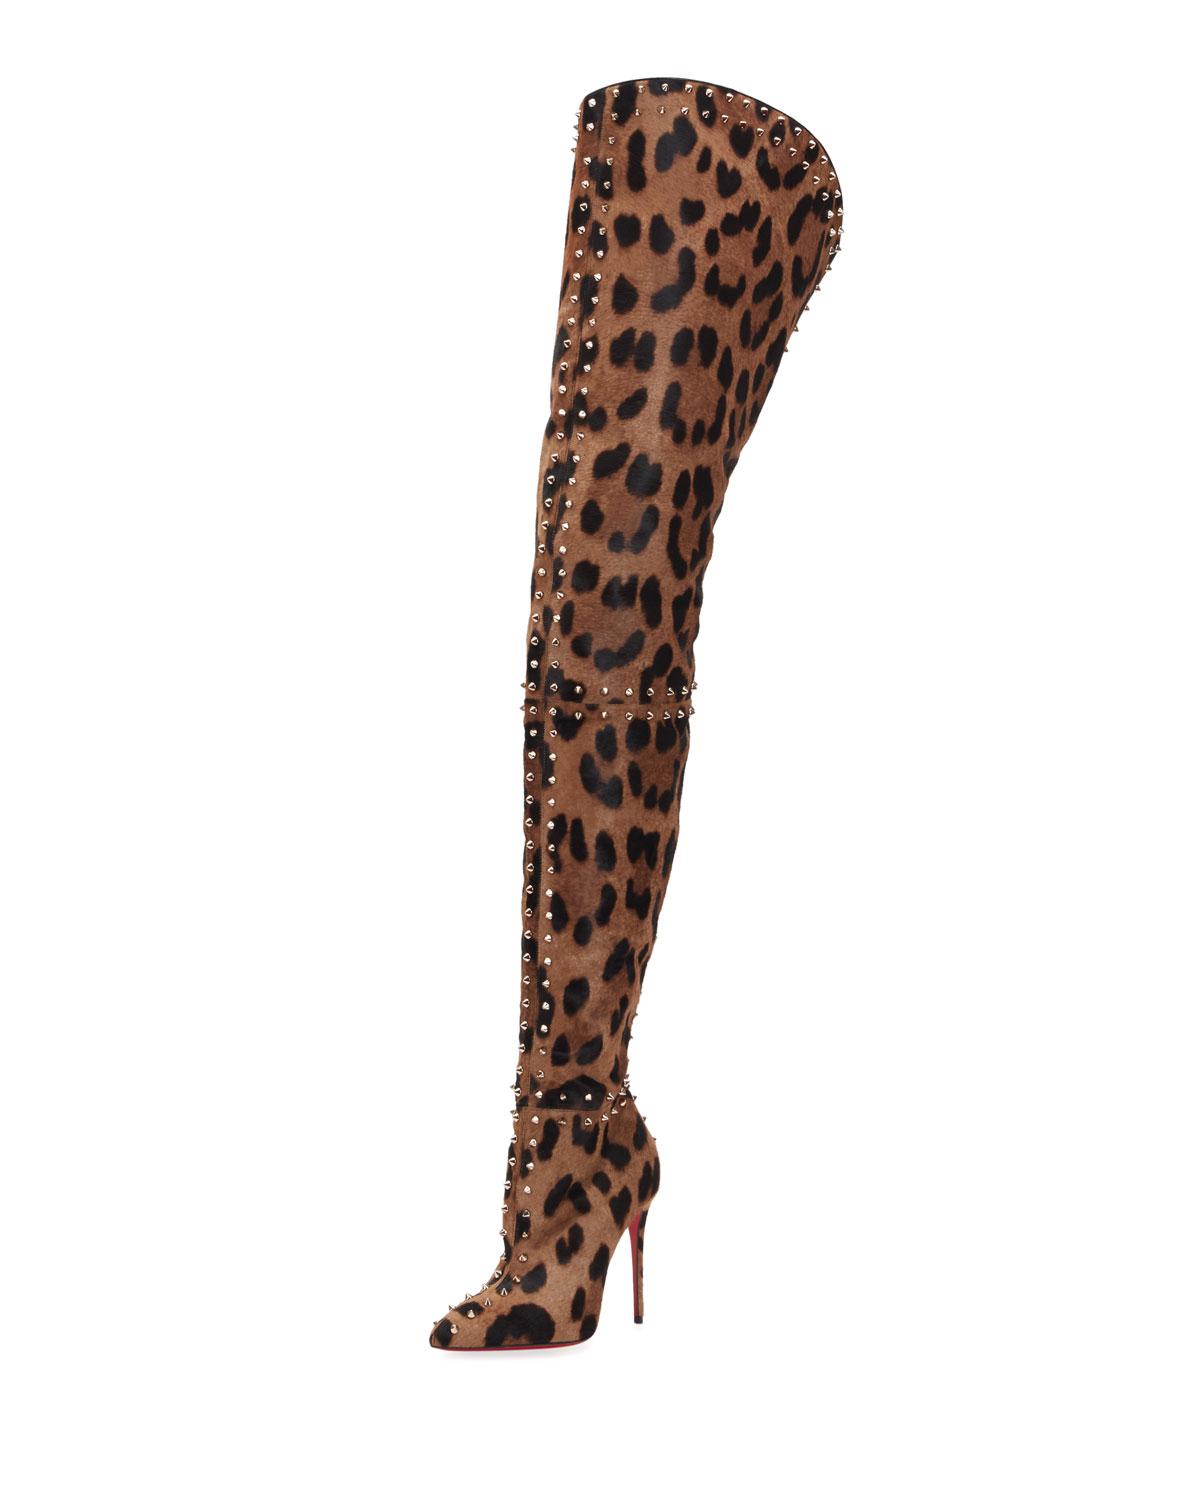 louboutin leopard boots